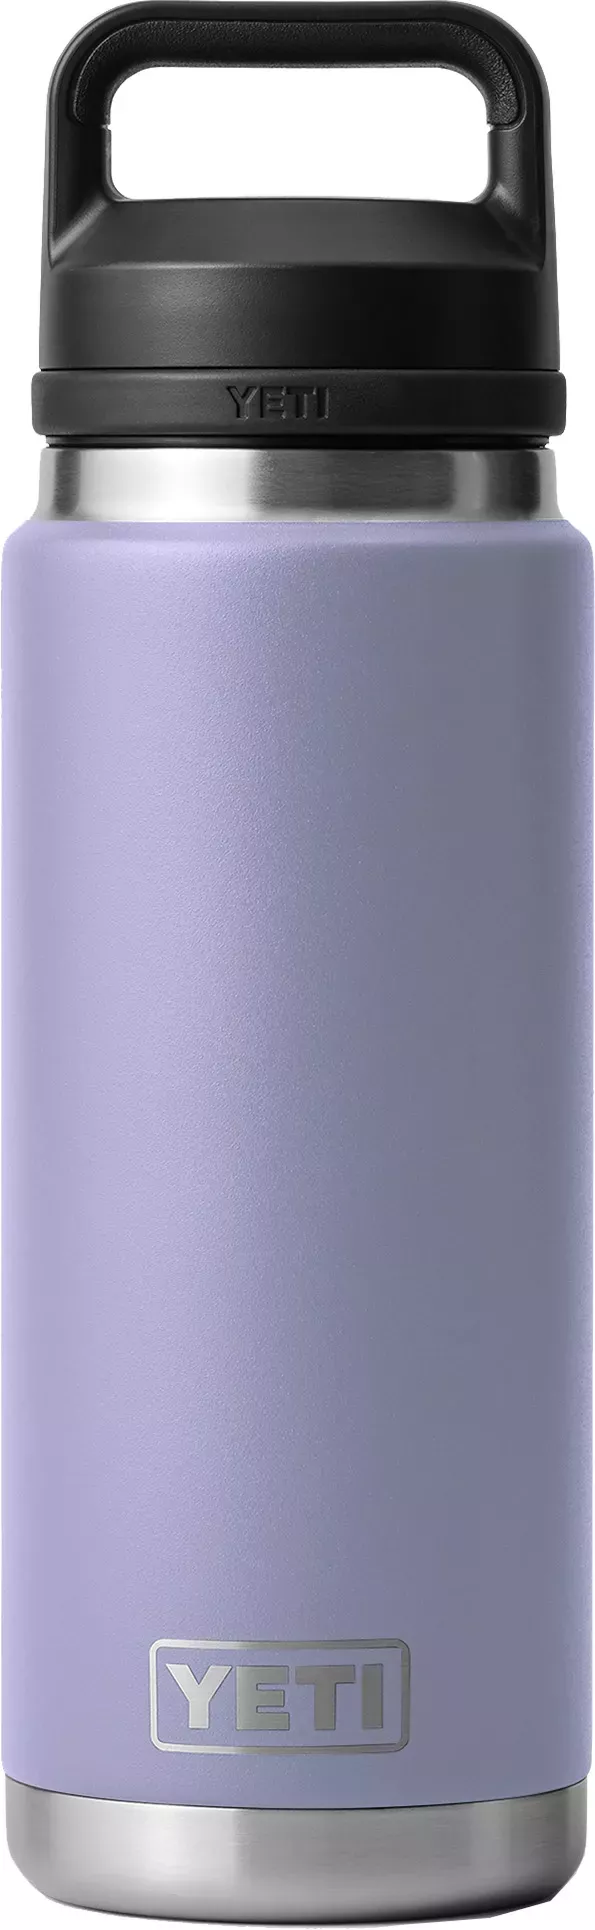 Yeti Hopper Flip 18 Soft Cooler - Cosmic Lilac - Grange Co-op